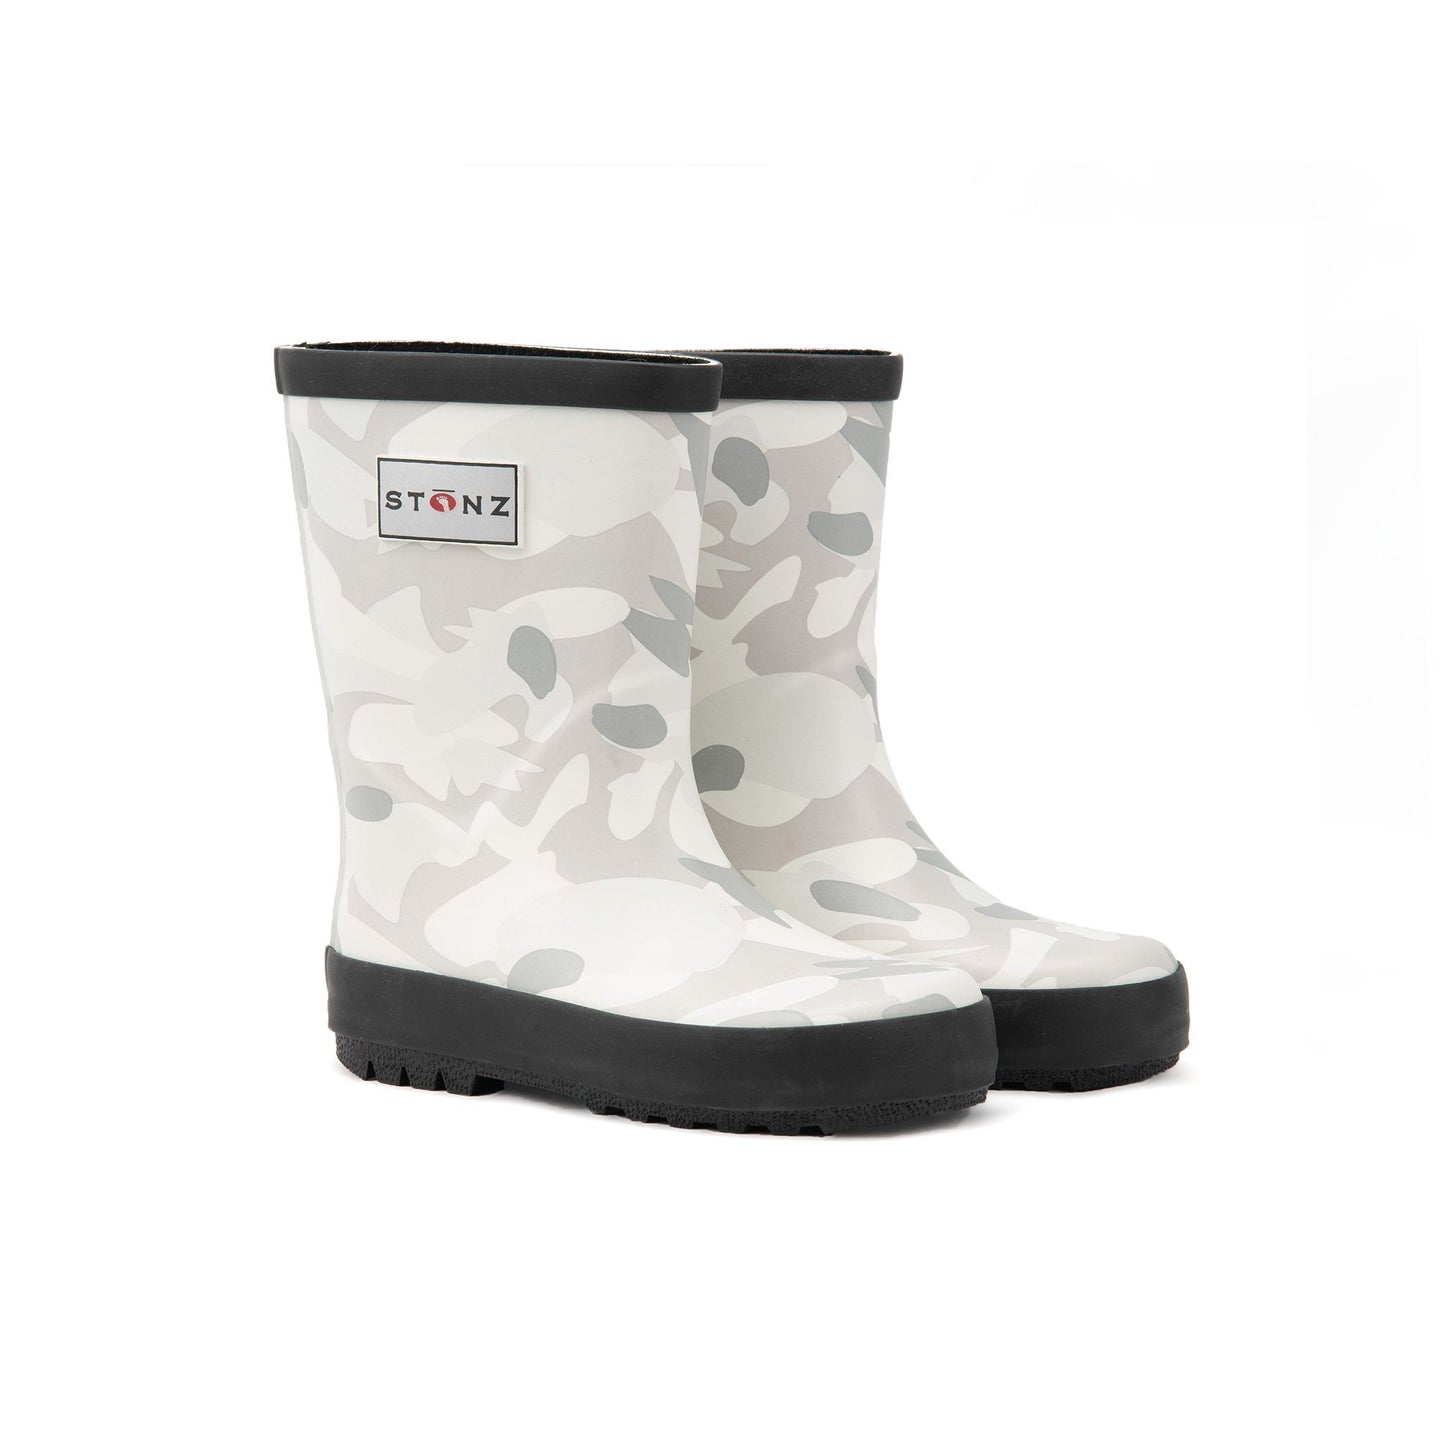 Kid's Stonz rubber Rain Boots in light grey camo print